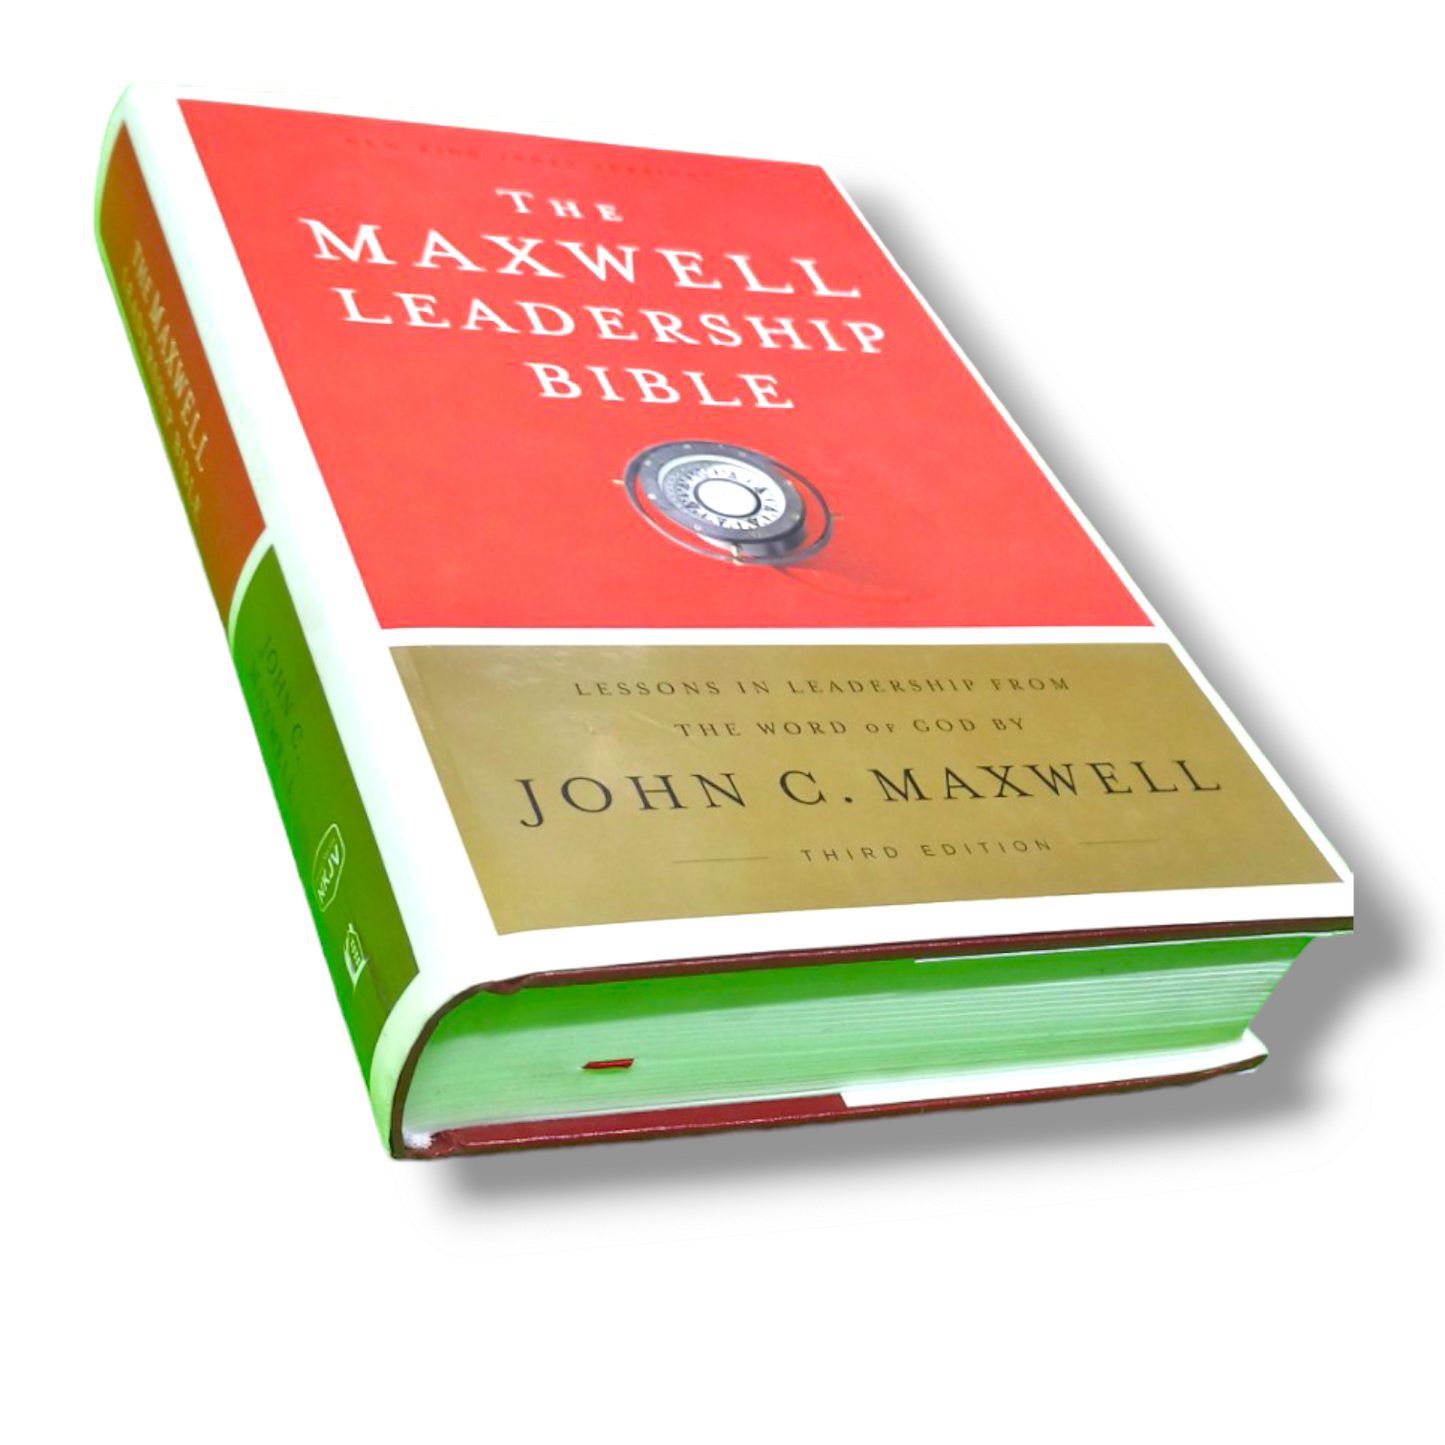 NKJV The Maxwell Leadership Bible | Hard Bound | Study Bible | New Edition